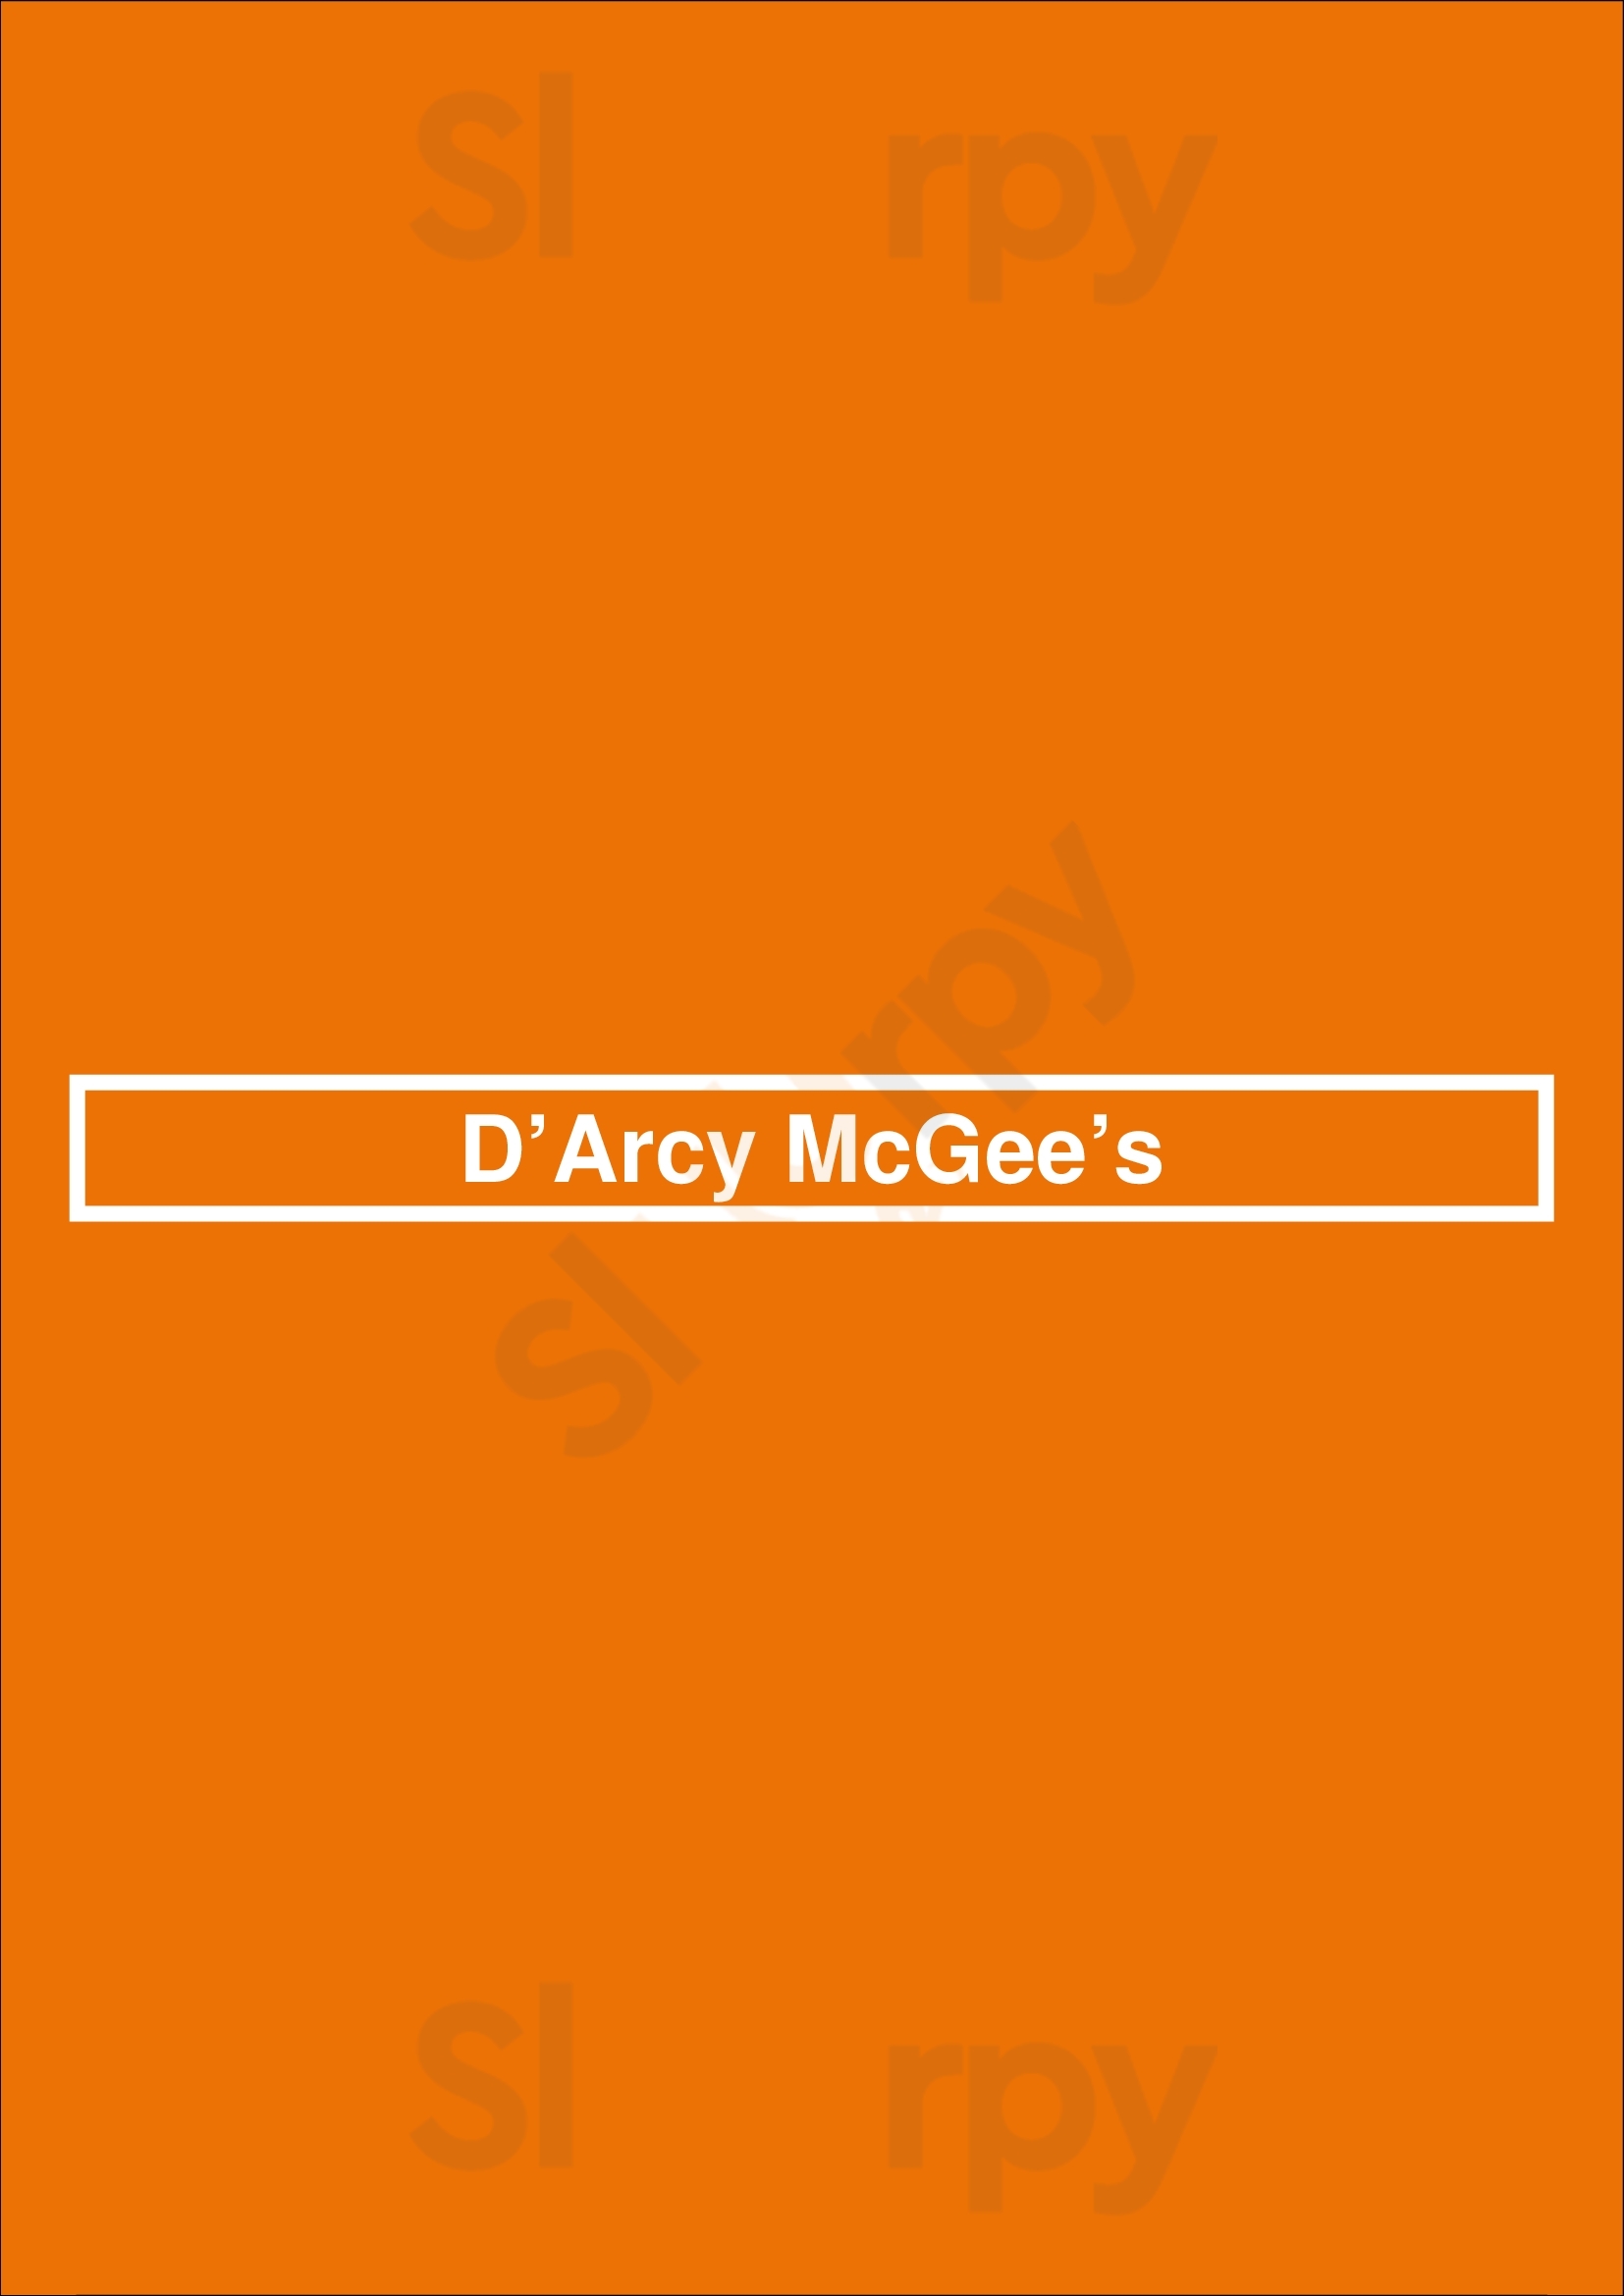 D'arcy Mcgee's Ottawa Menu - 1